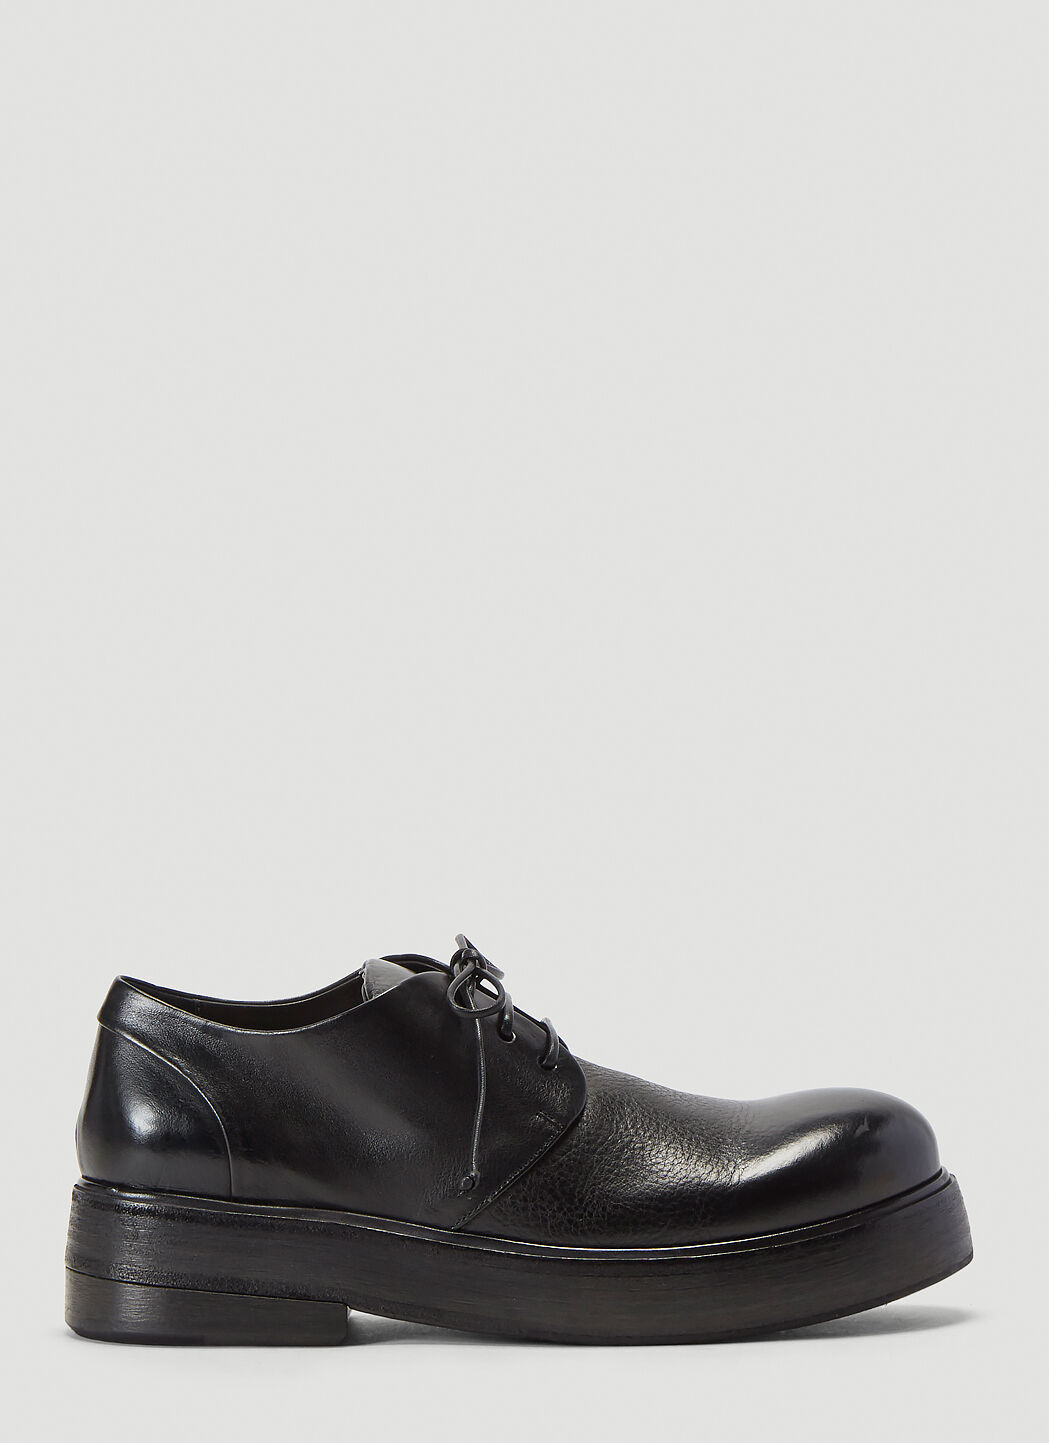 Vivienne Westwood Zuccolona Derby Shoes Black vvw0255059